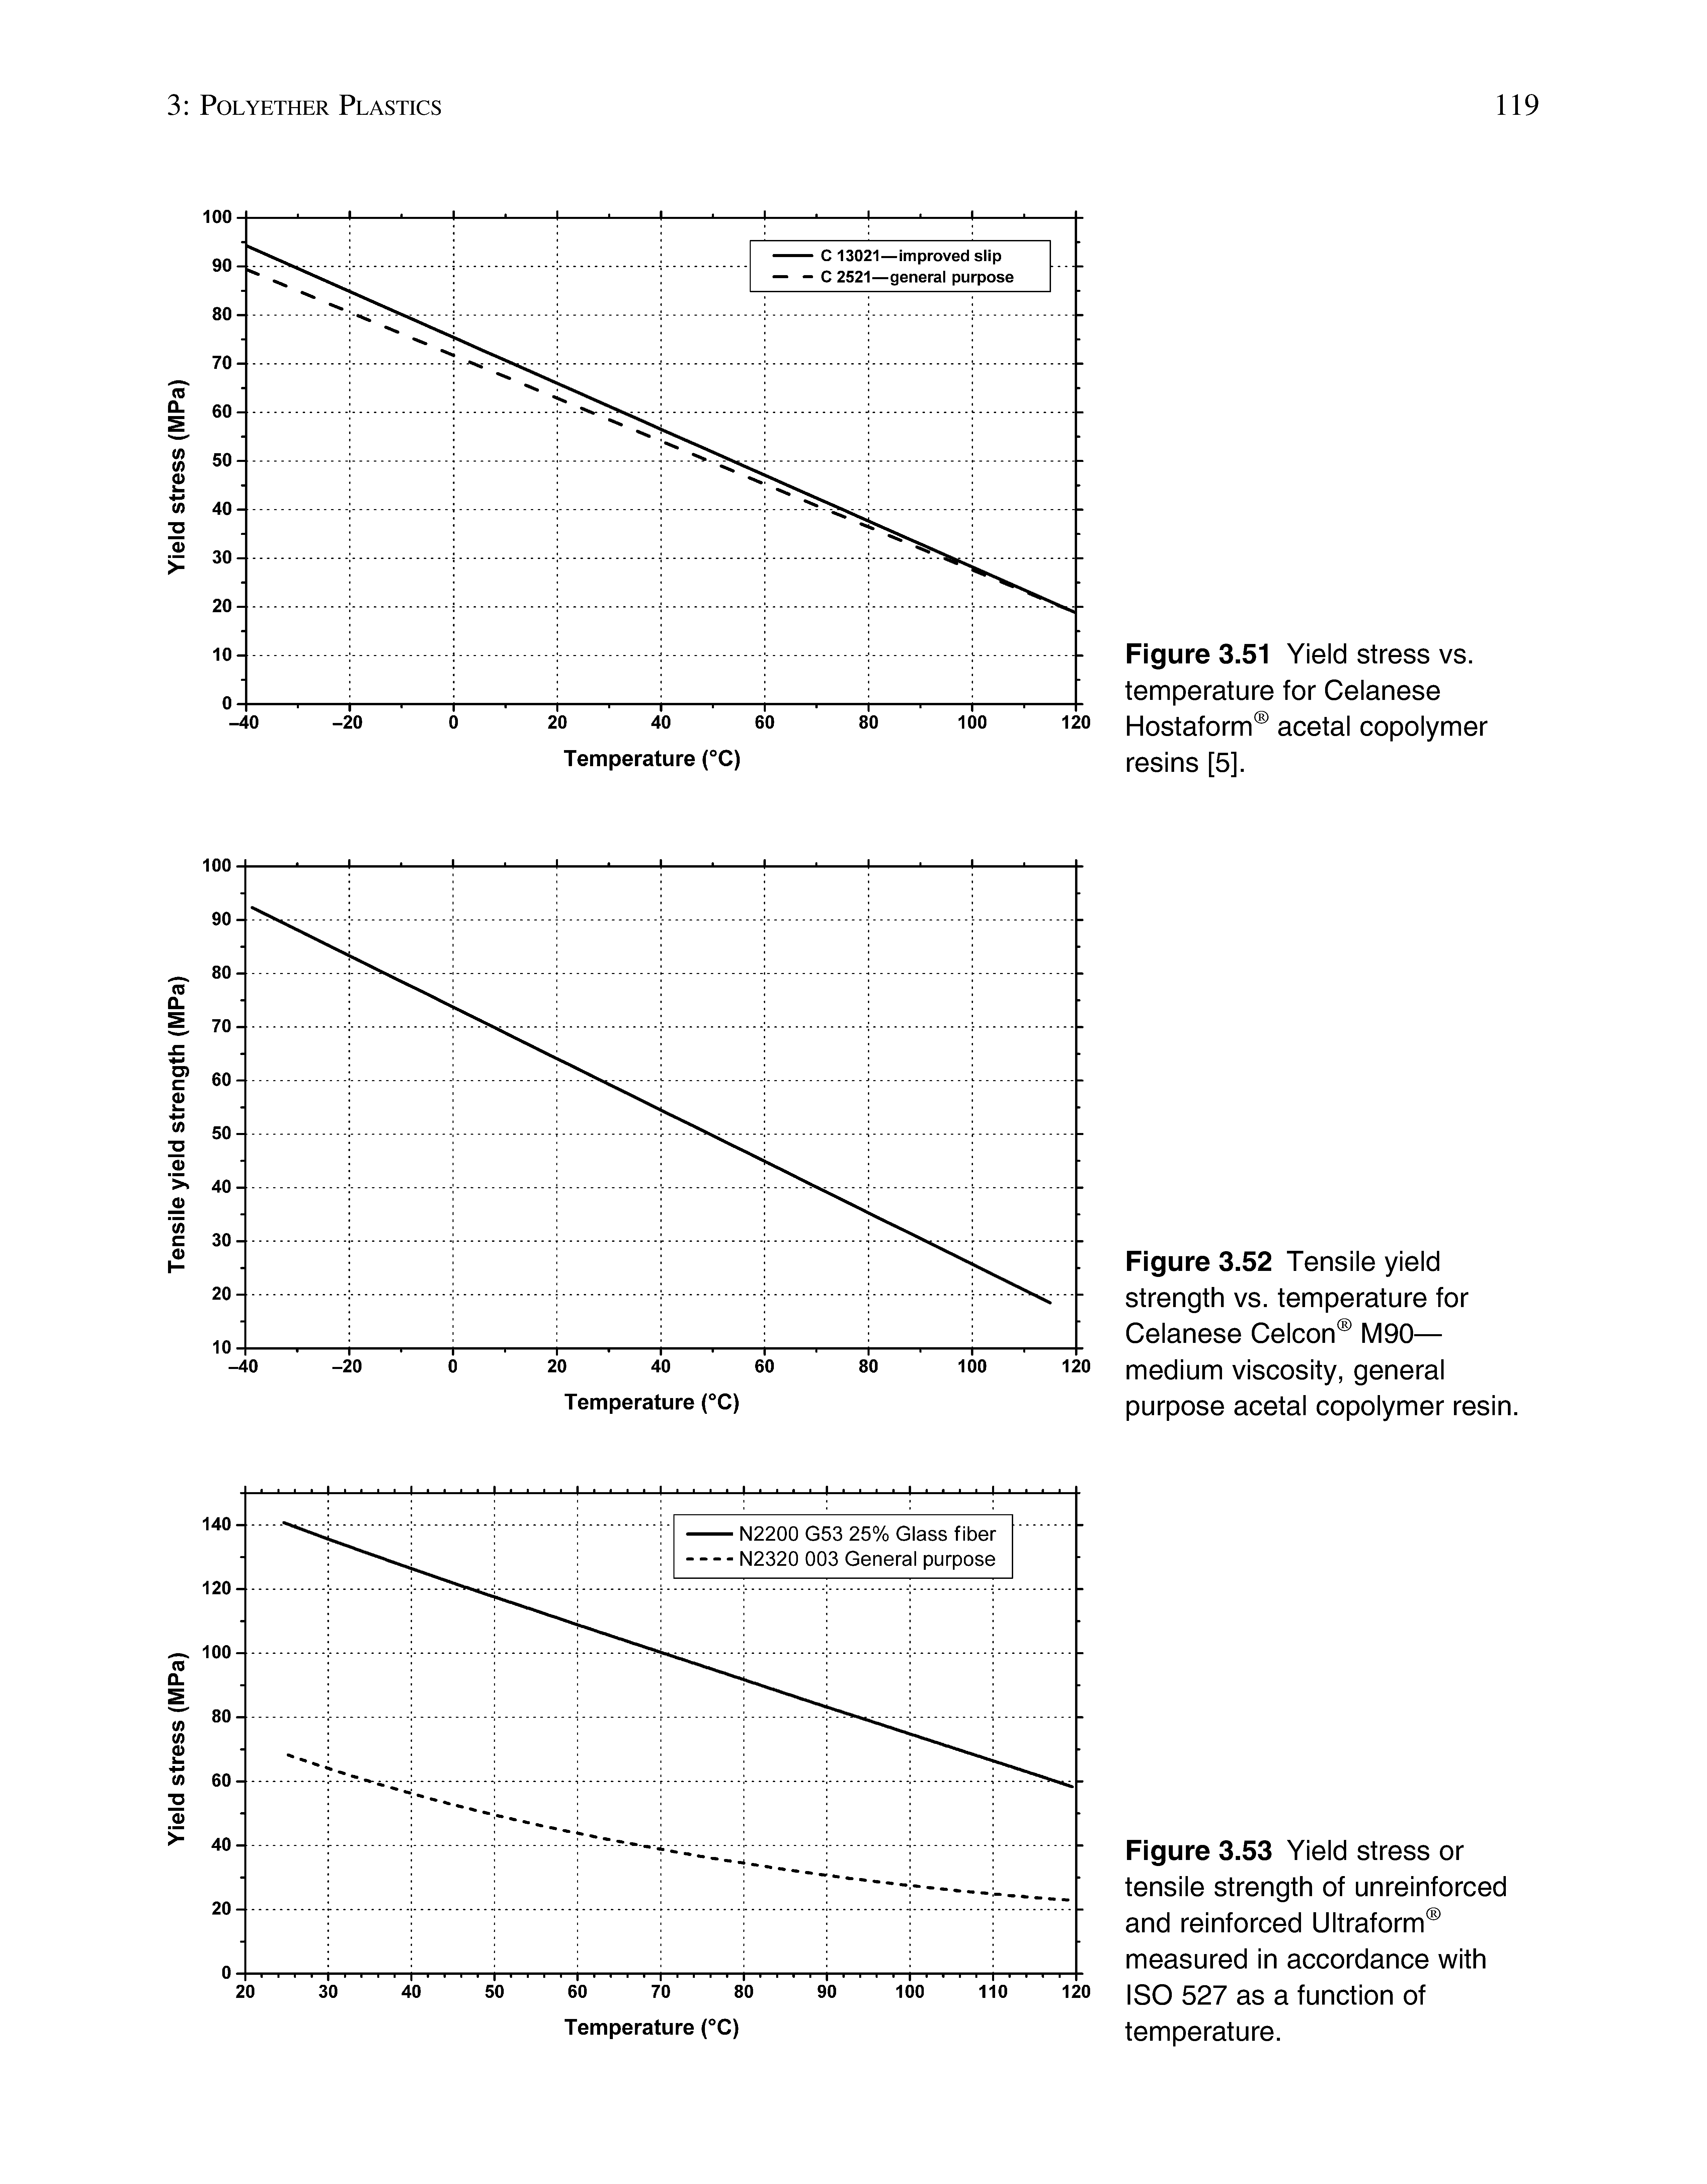 Figure 3.52 Tensile yield strength vs. temperature for Celanese Celcon M90— medium viscosity, general purpose acetal copolymer resin.